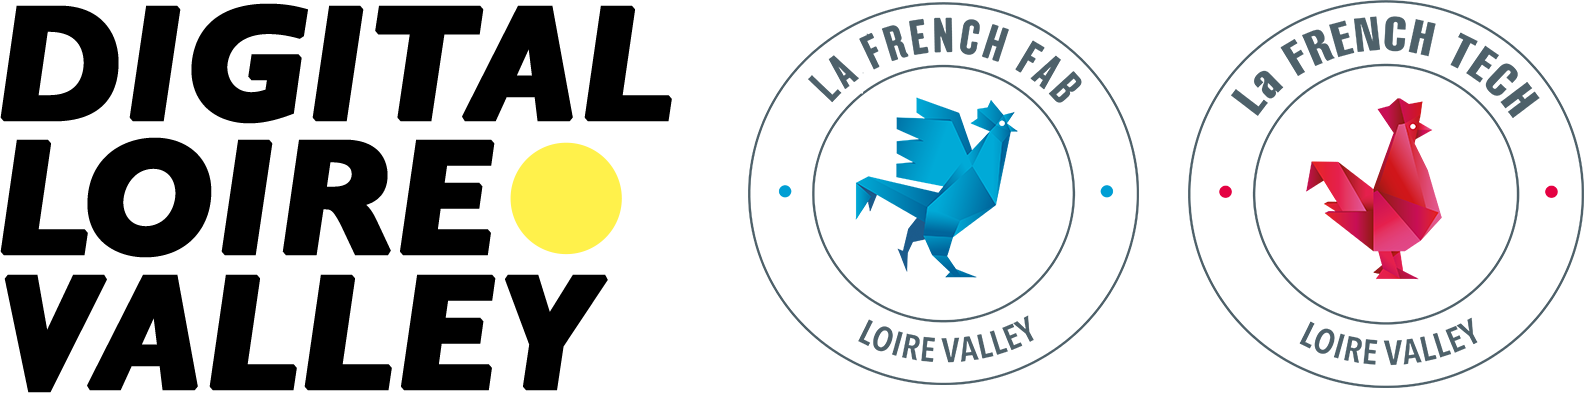 Logo Digital Loire Valley